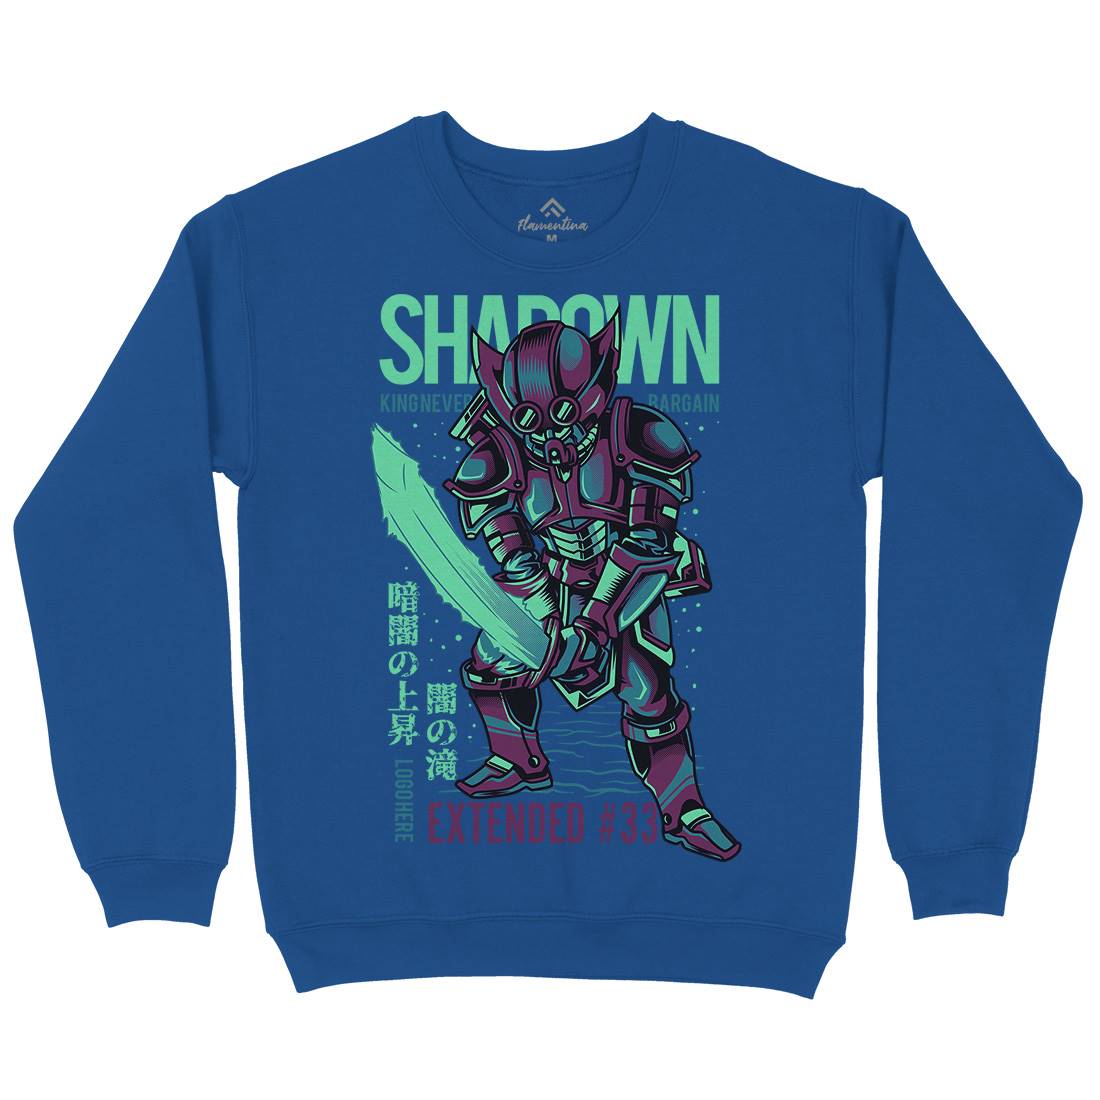 Shadown Knight Kids Crew Neck Sweatshirt Warriors D812